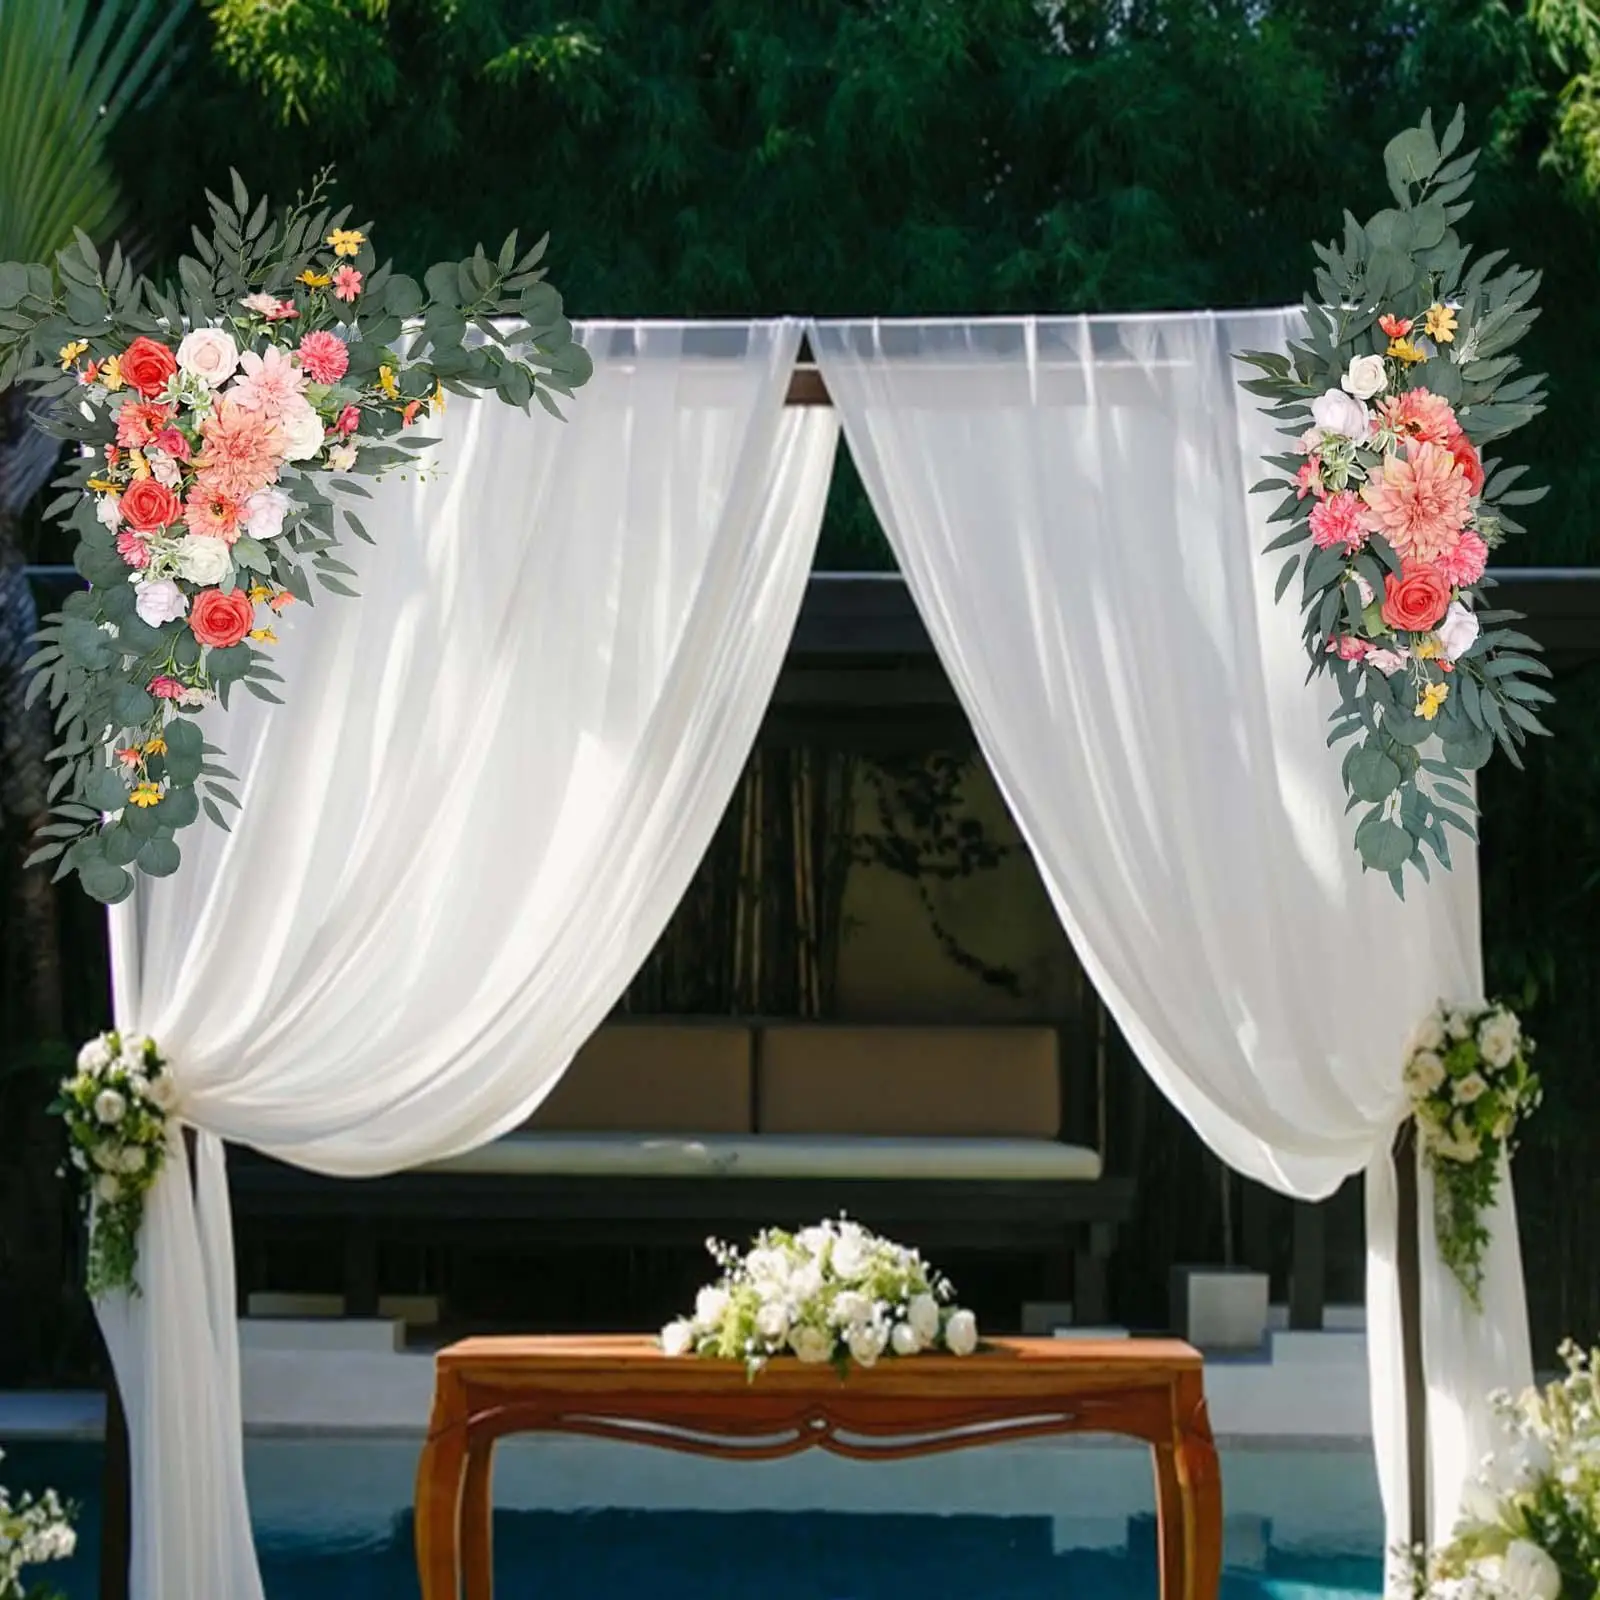 2Pcs Wedding Arch Flowers Kit Wreath Centerpiece Arch Decoration Garland for